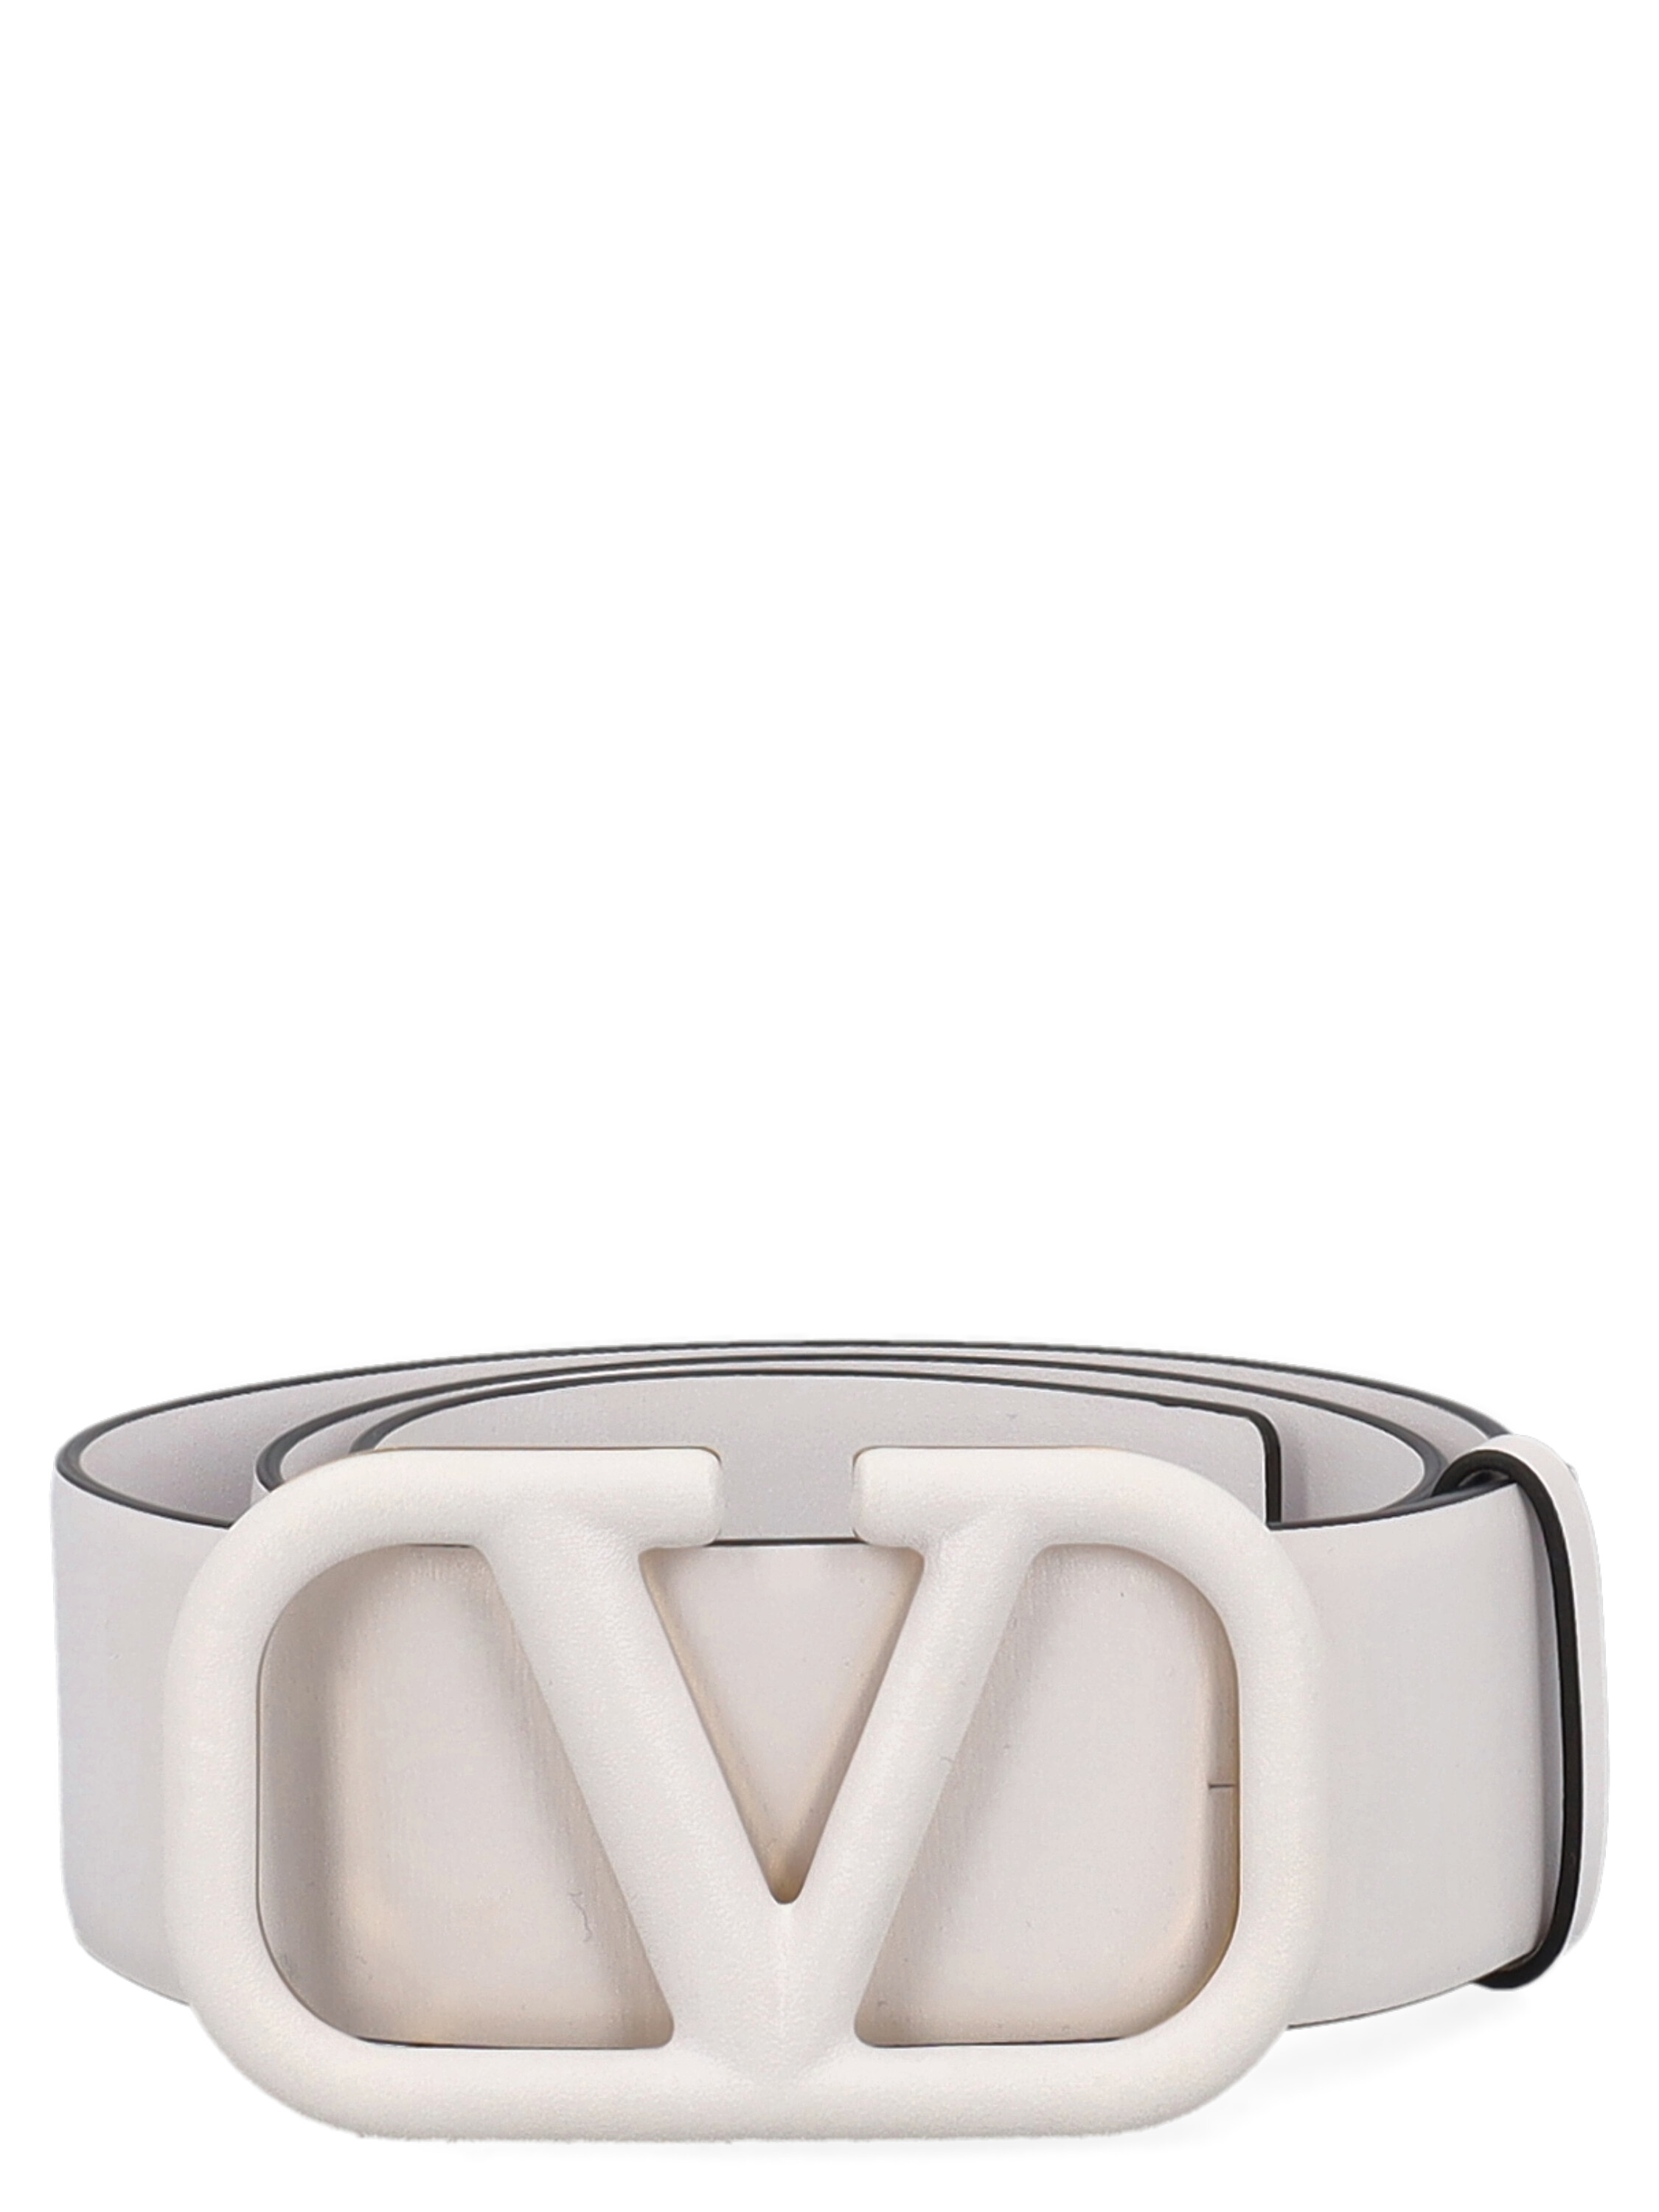 Pre-owned Valentino Garavani Women's Belts - Valentino - In White Leather